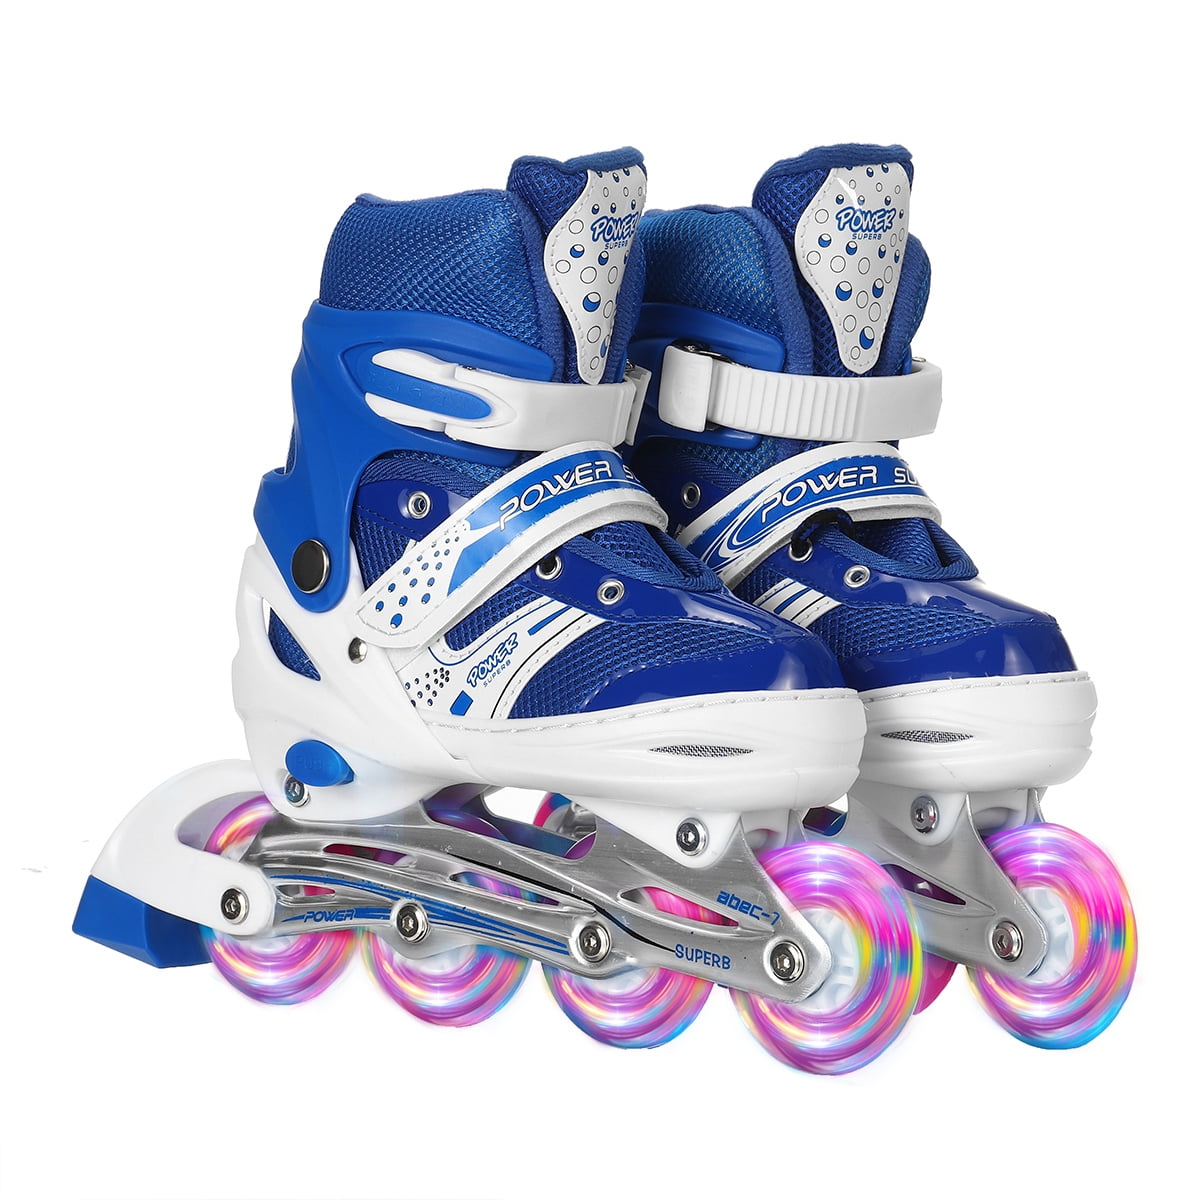 Children’s Inline Skates Combo Set - Adjustable Light Up Roller Blading Full Illuminating Wheels Inline Skates Beginner Roller Skates w/ Secure Helmet Kneepad Elbow-pad